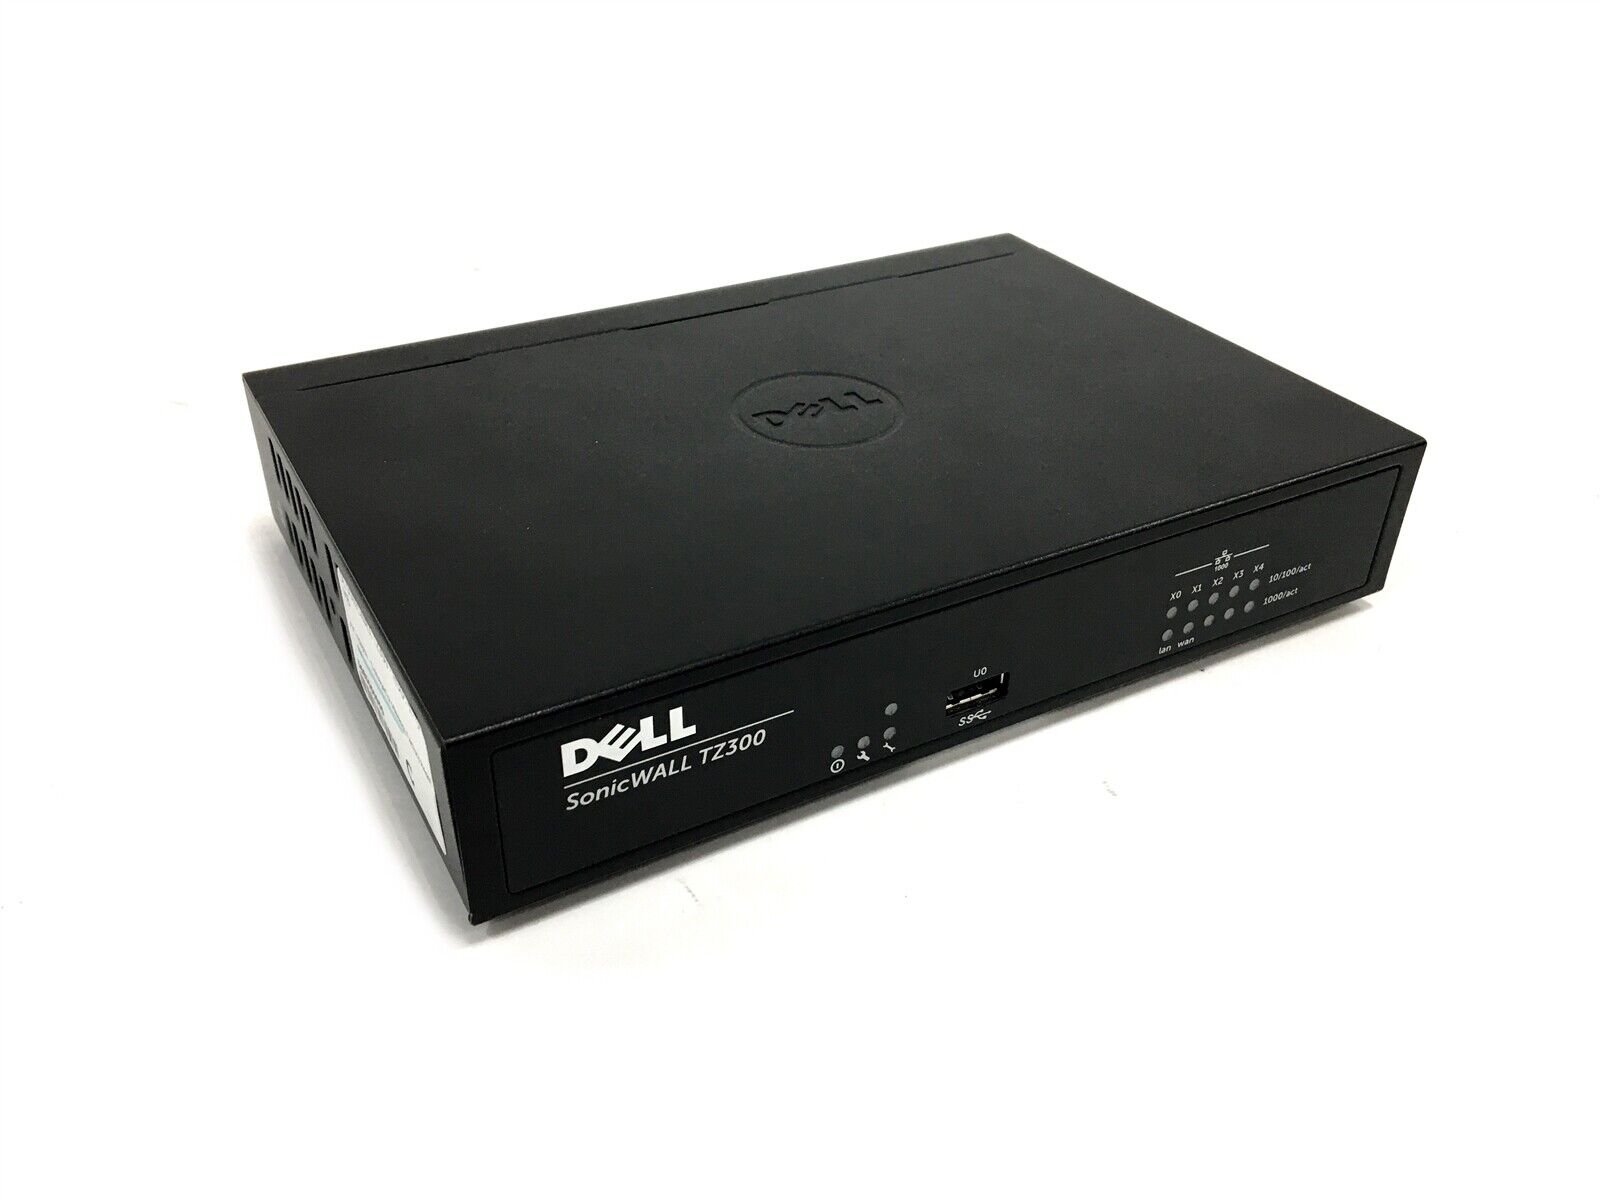 Dell SonicWALL TZ300 Firewall Appliance Transfer Ready - NO AC